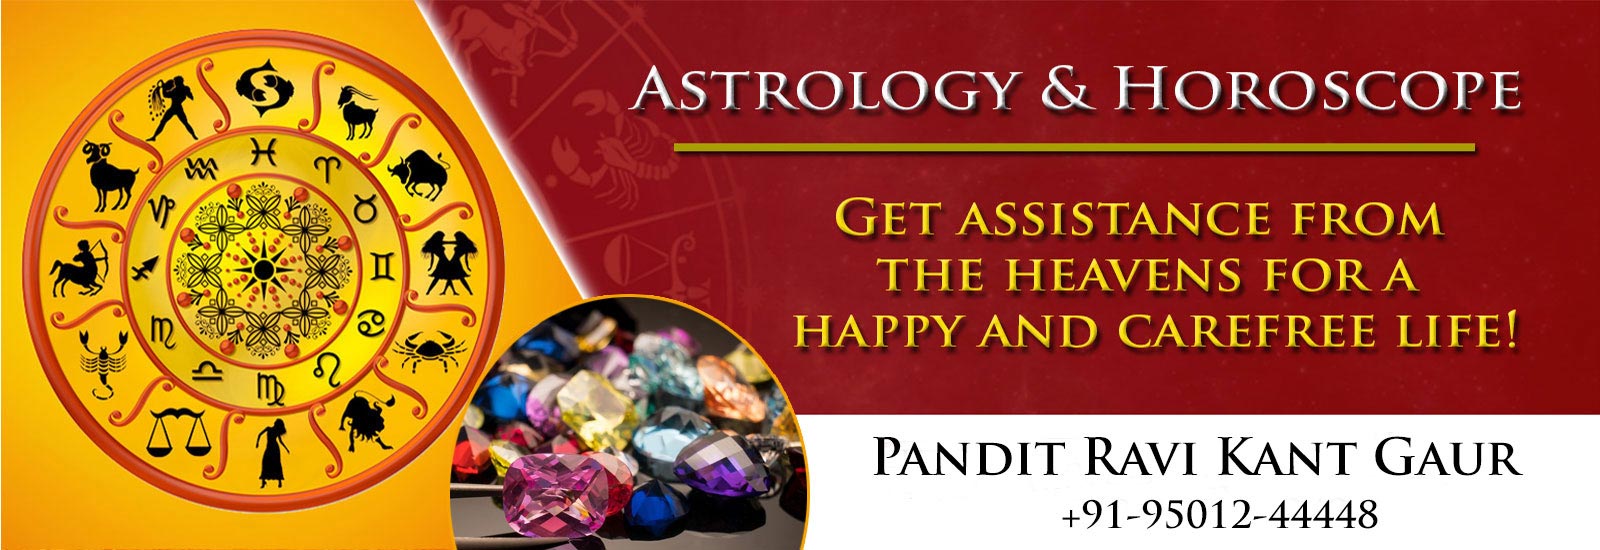 Get Best Astrology & Horoscope Prediction Services Online